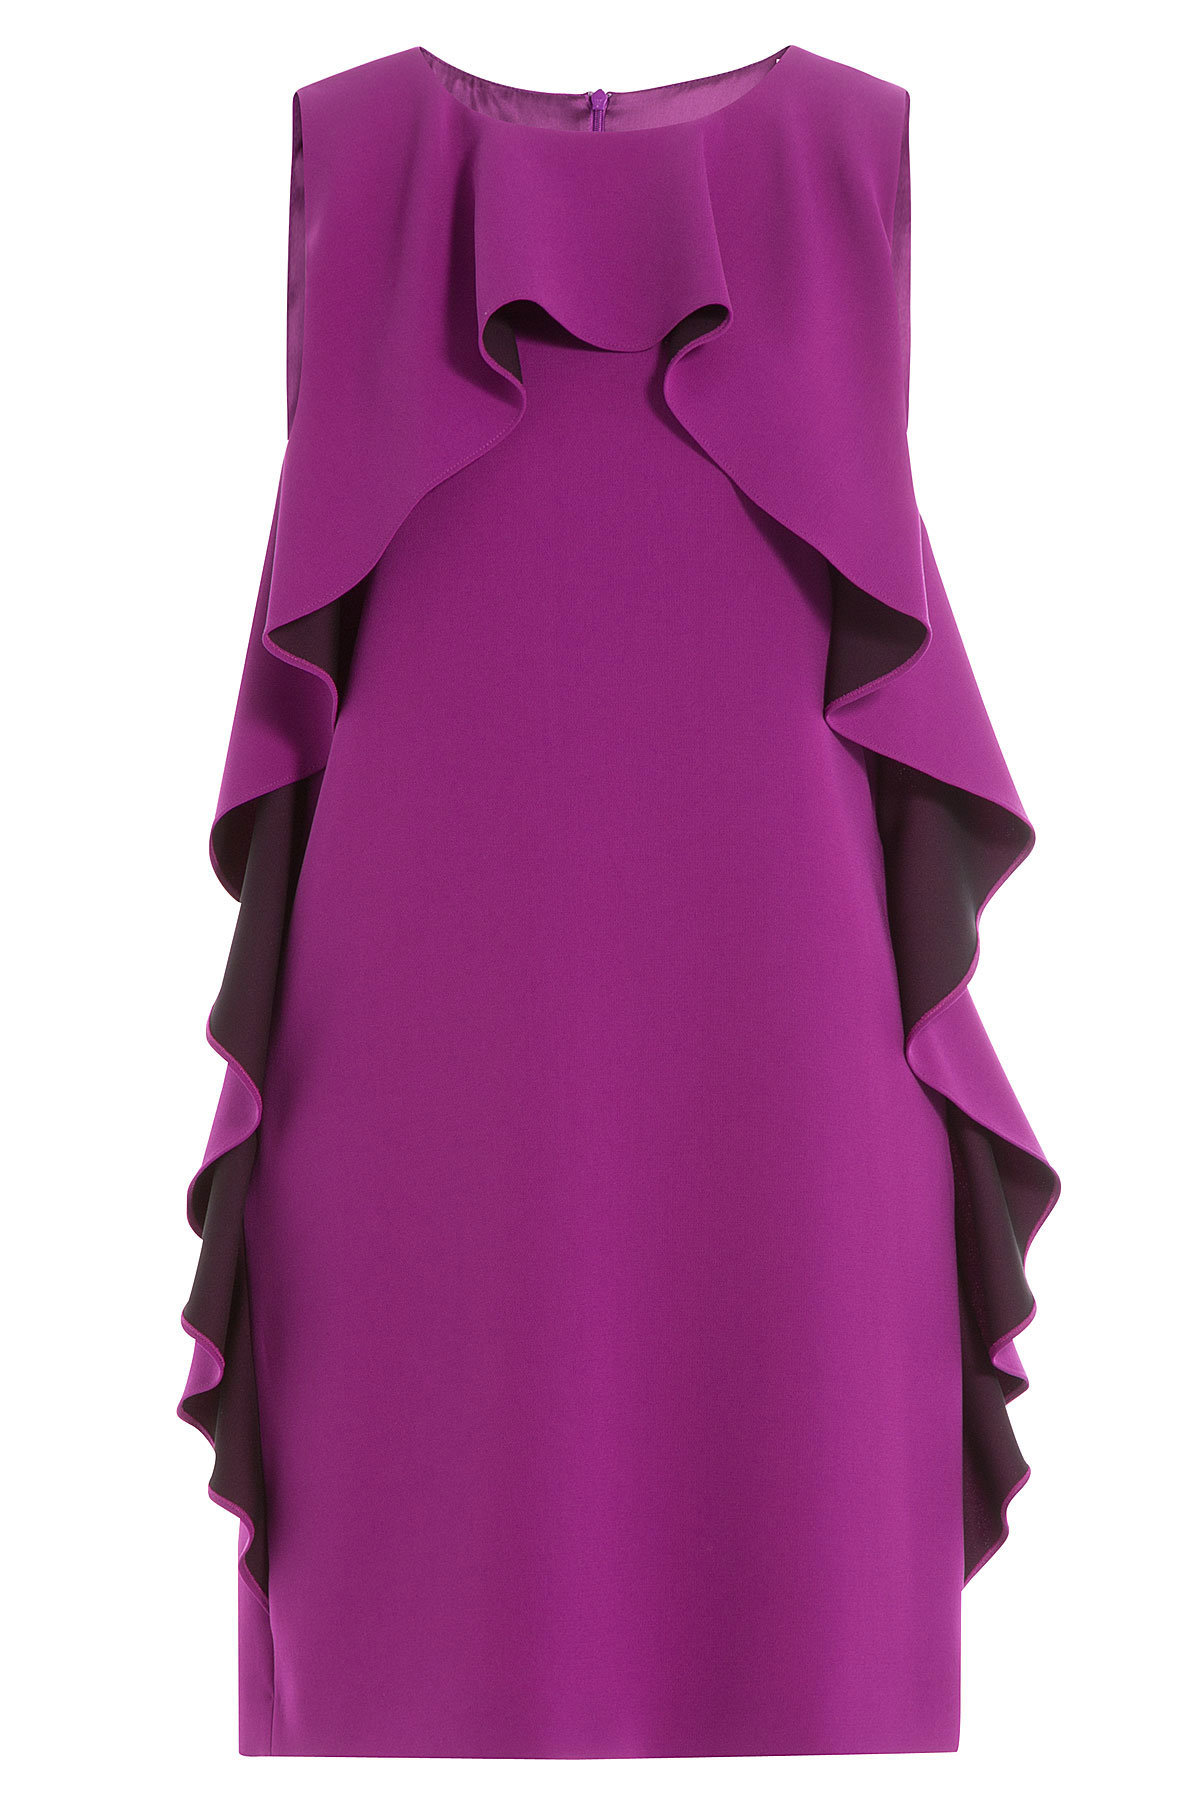 Boutique Moschino - Ruffled Crepe Dress